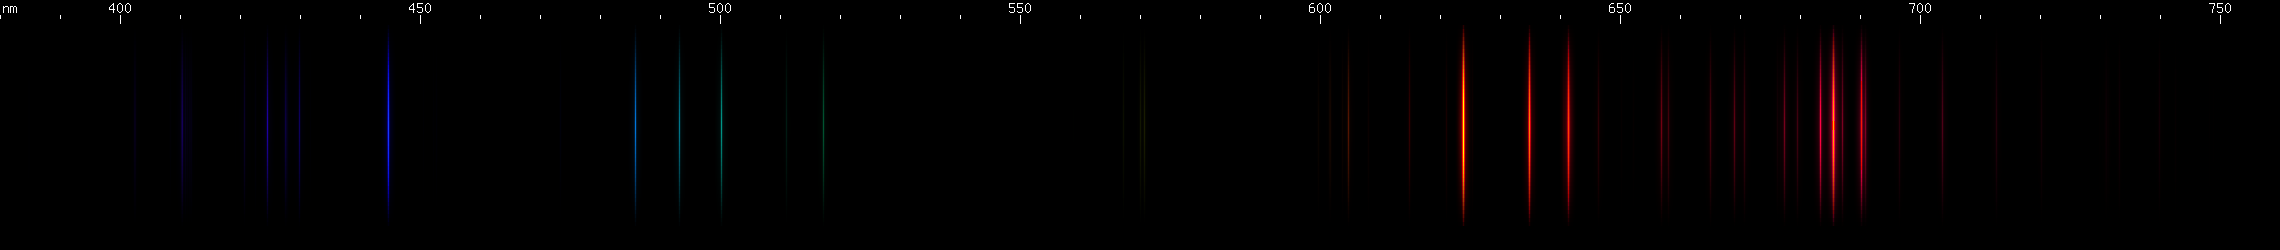 Spectral lines of Fluorine.